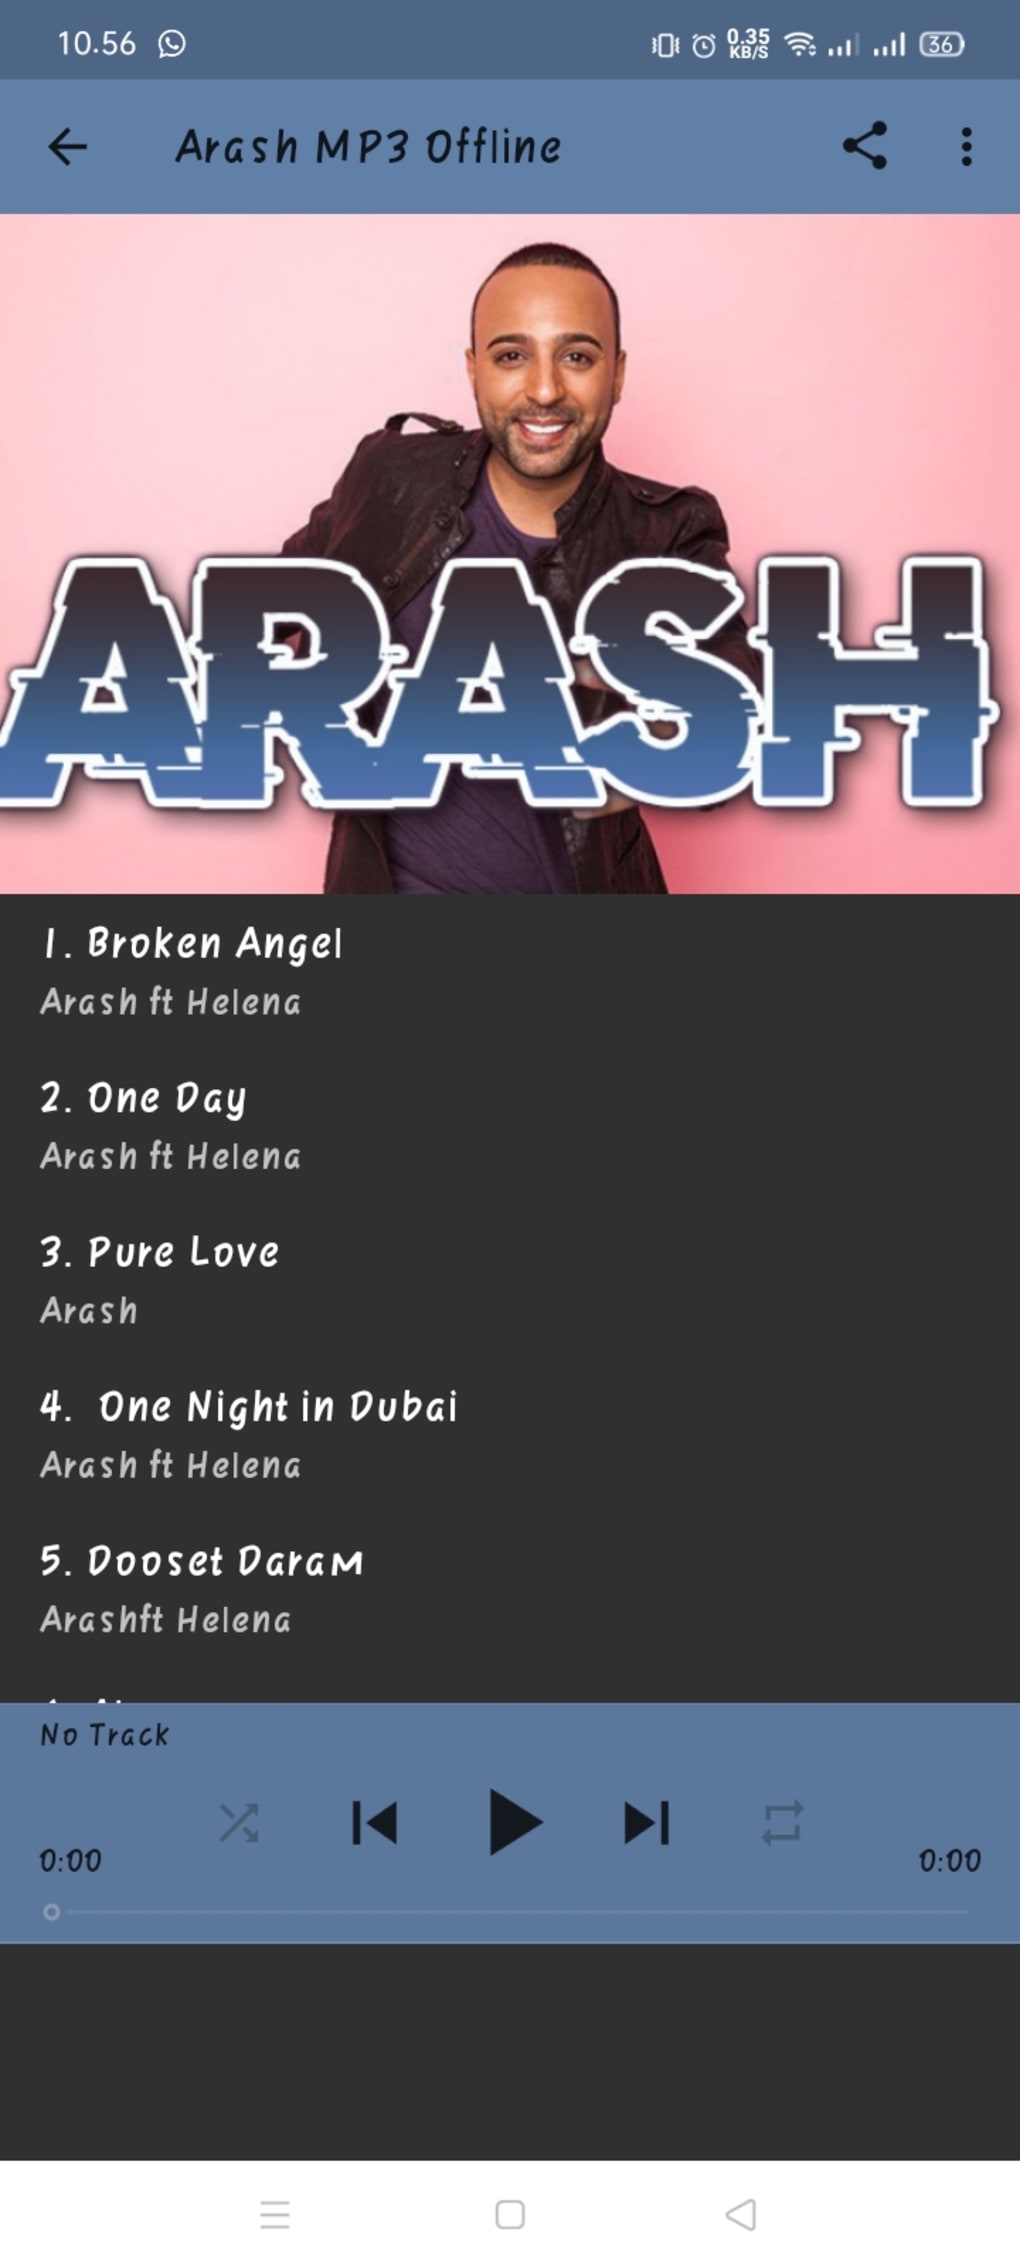 Arash broken Angel. Arash Helena broken Angel. Arash Pure Love. Arash - broken Angel (ft. Helena).